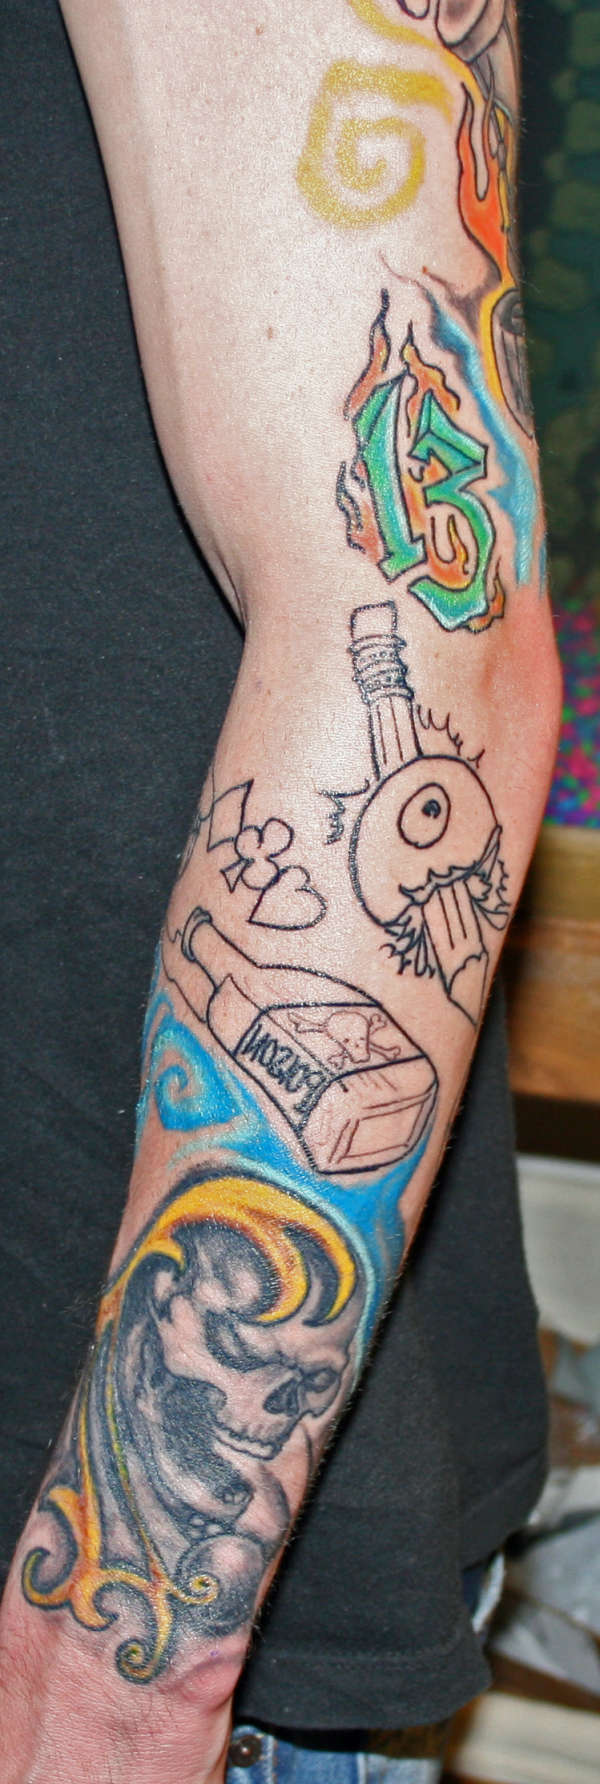 unfinished jail style sleeve tattoo